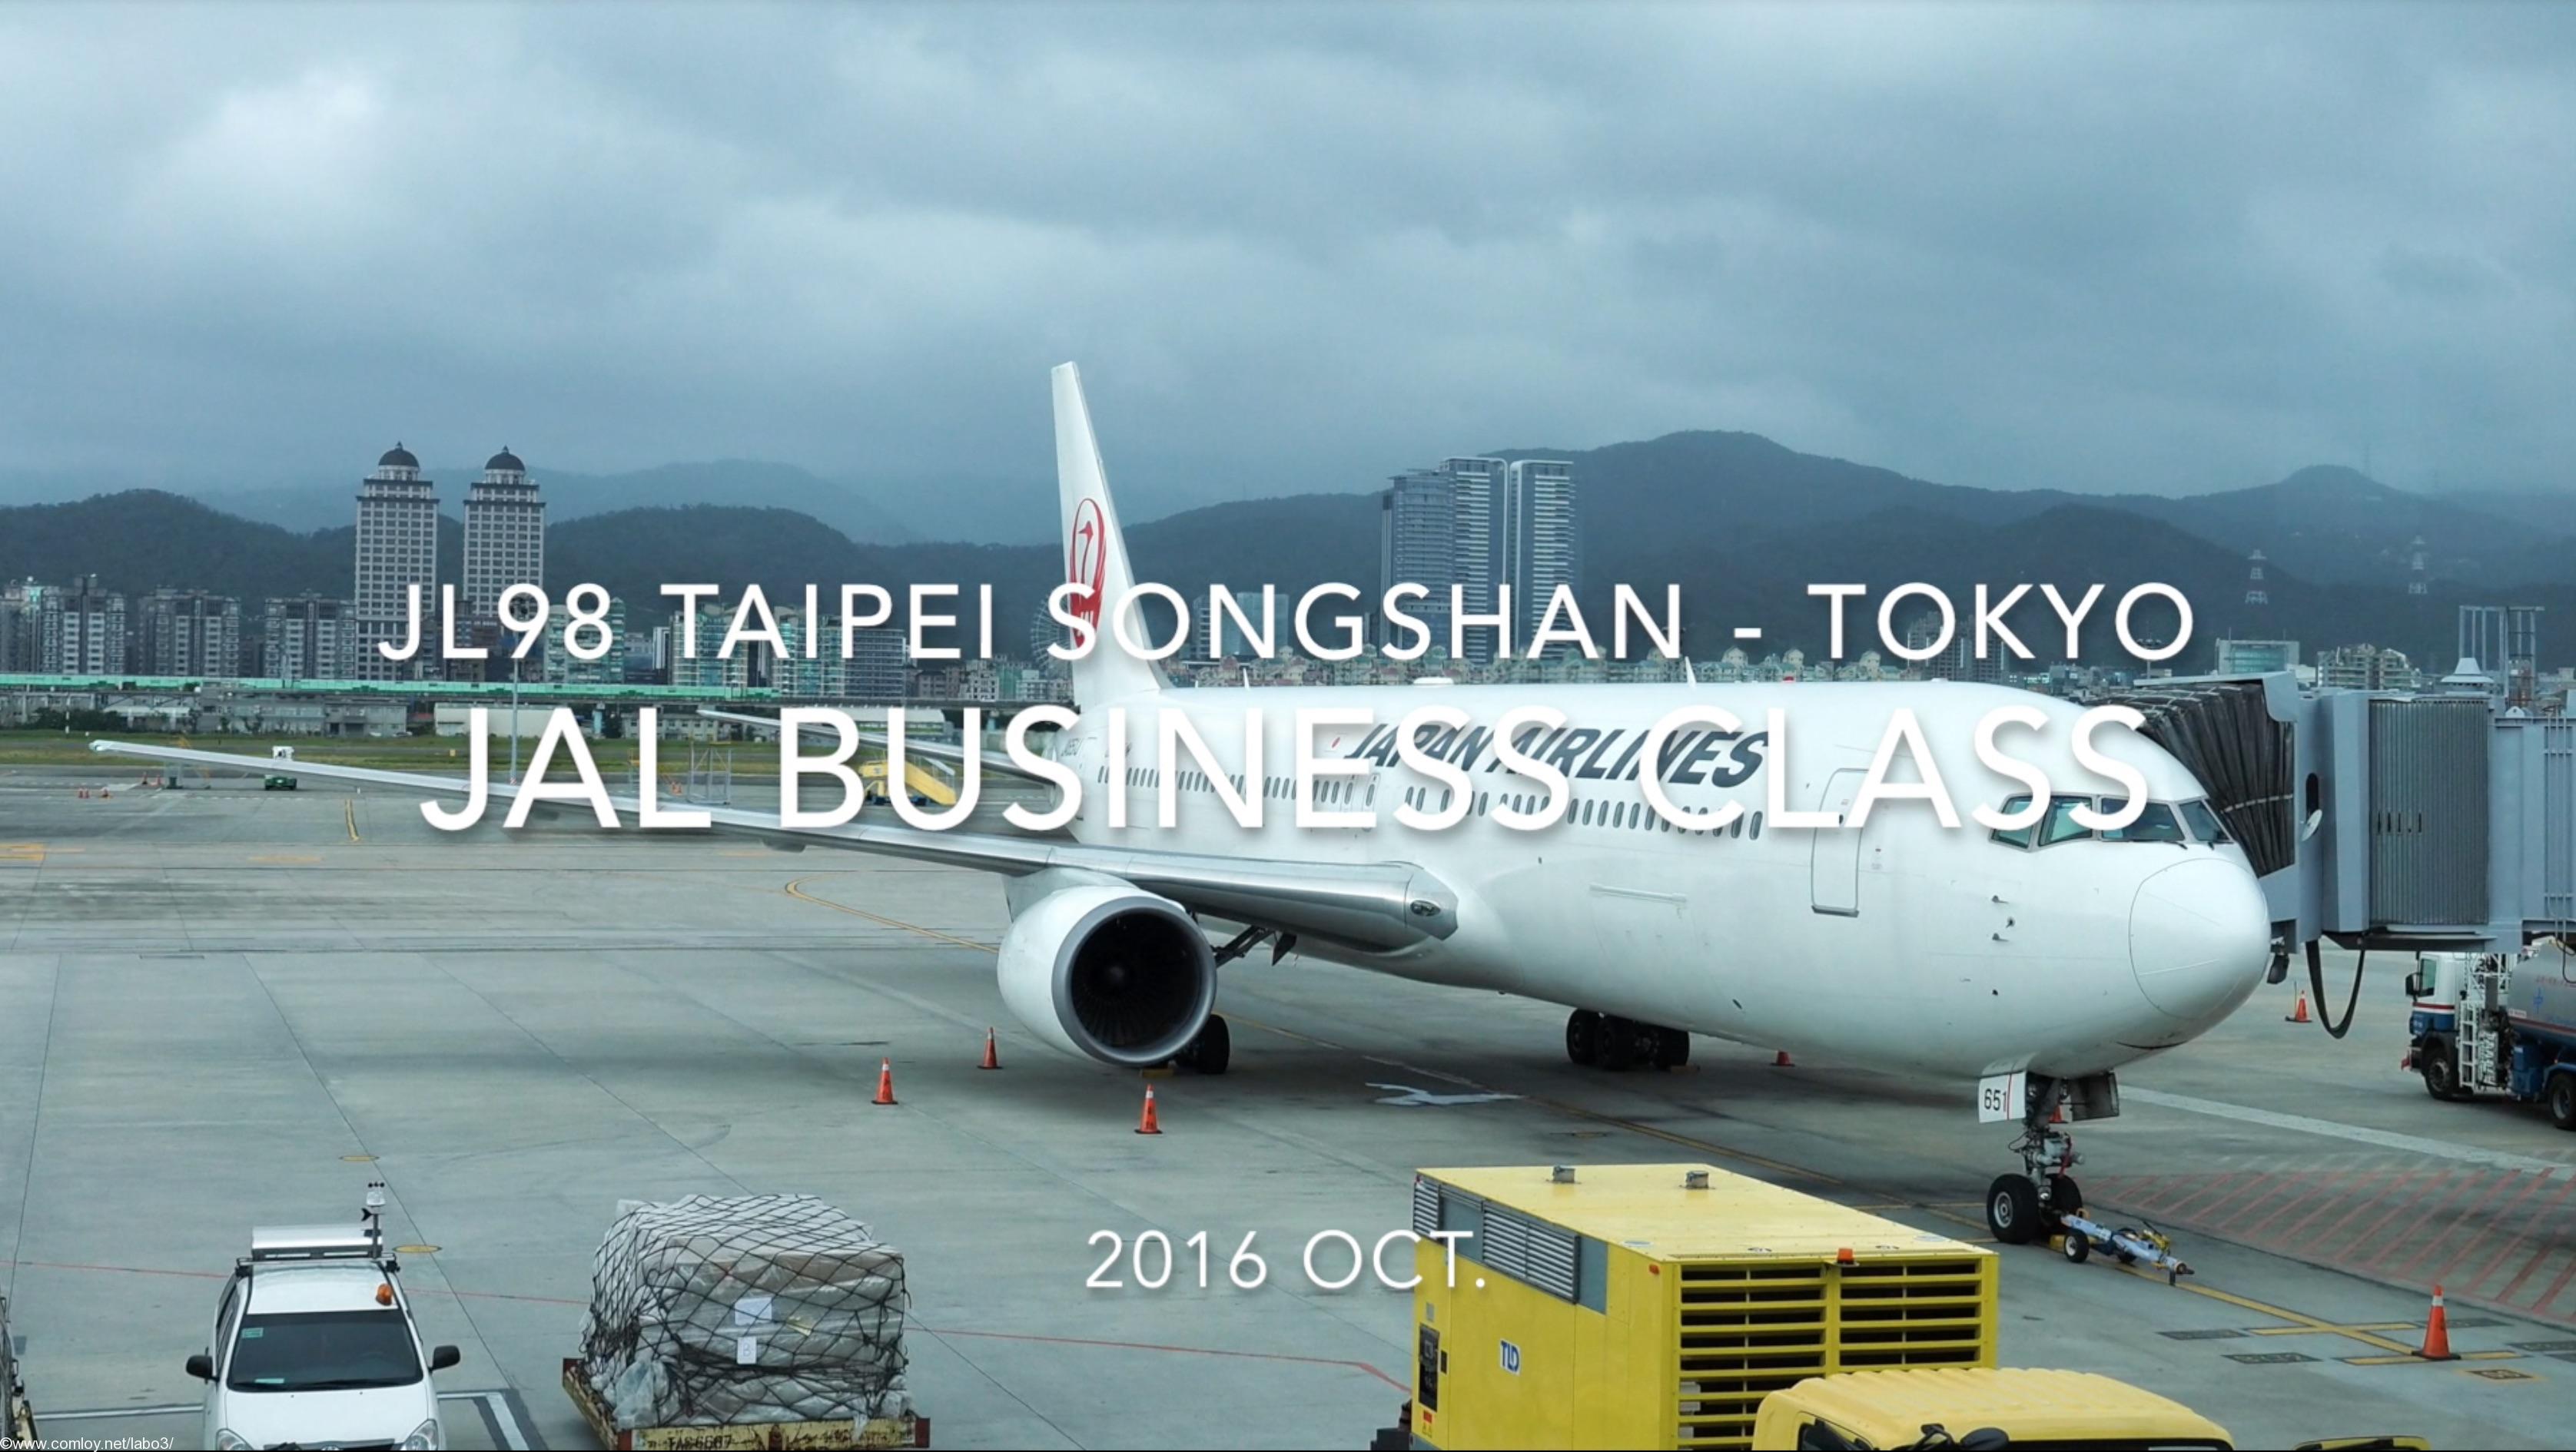 【Flight Report】JAL Business Class JL98 TAIPEI Songshan - TOKYO HANEDA 2016・10 日本航空 ビジネスクラス 搭乗記